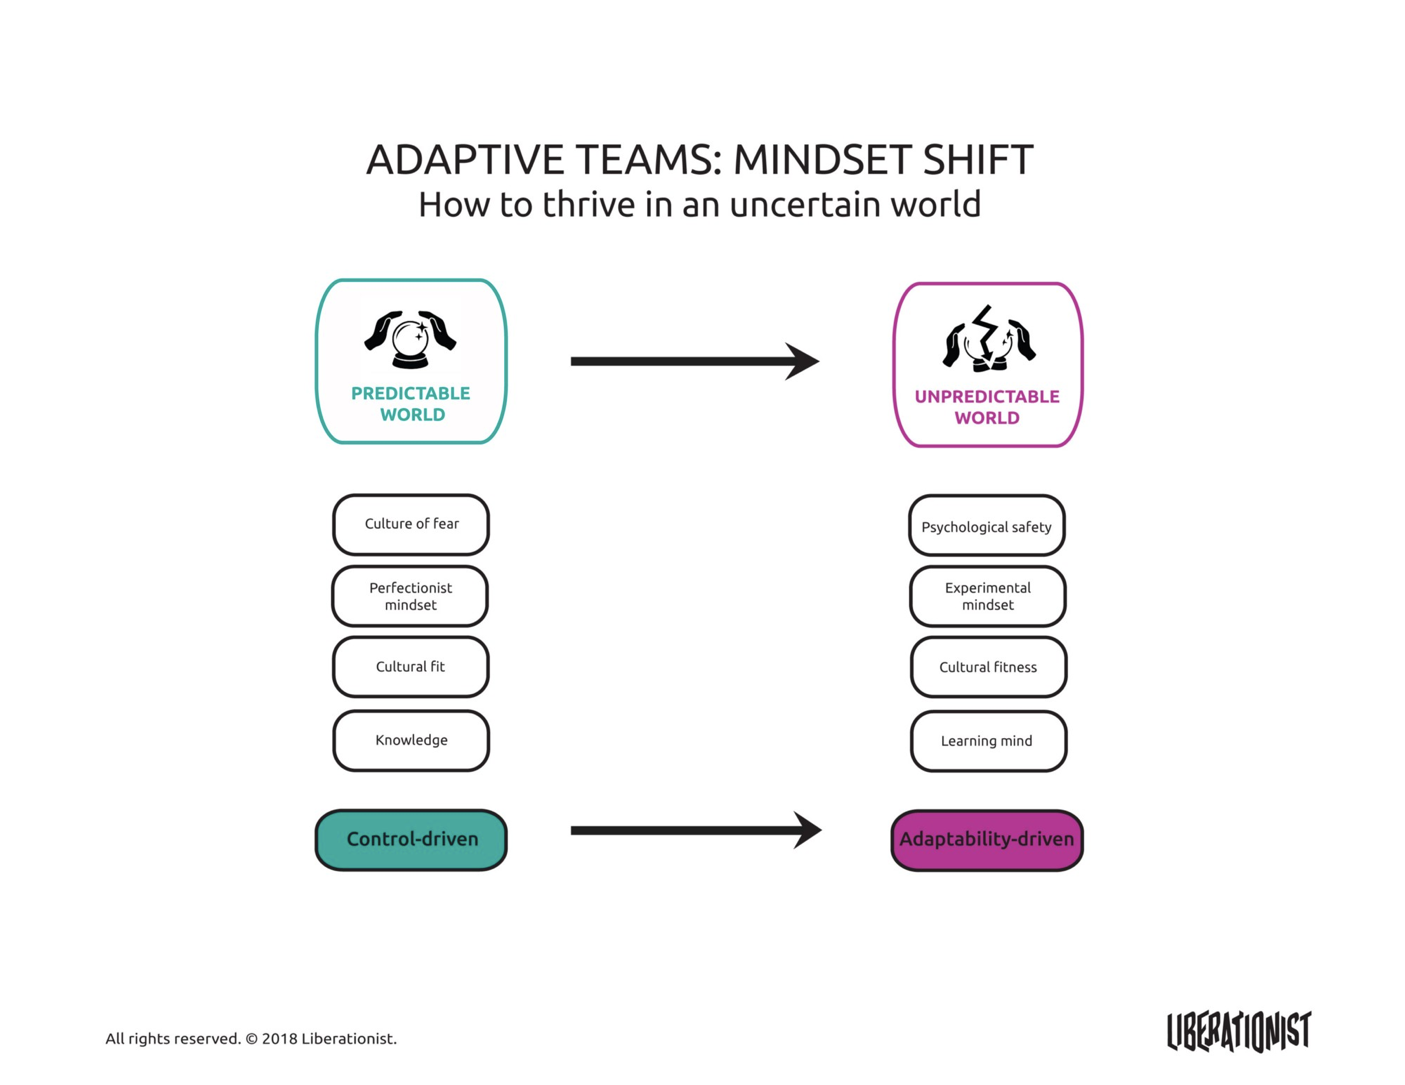 how to improve team performance - adapt